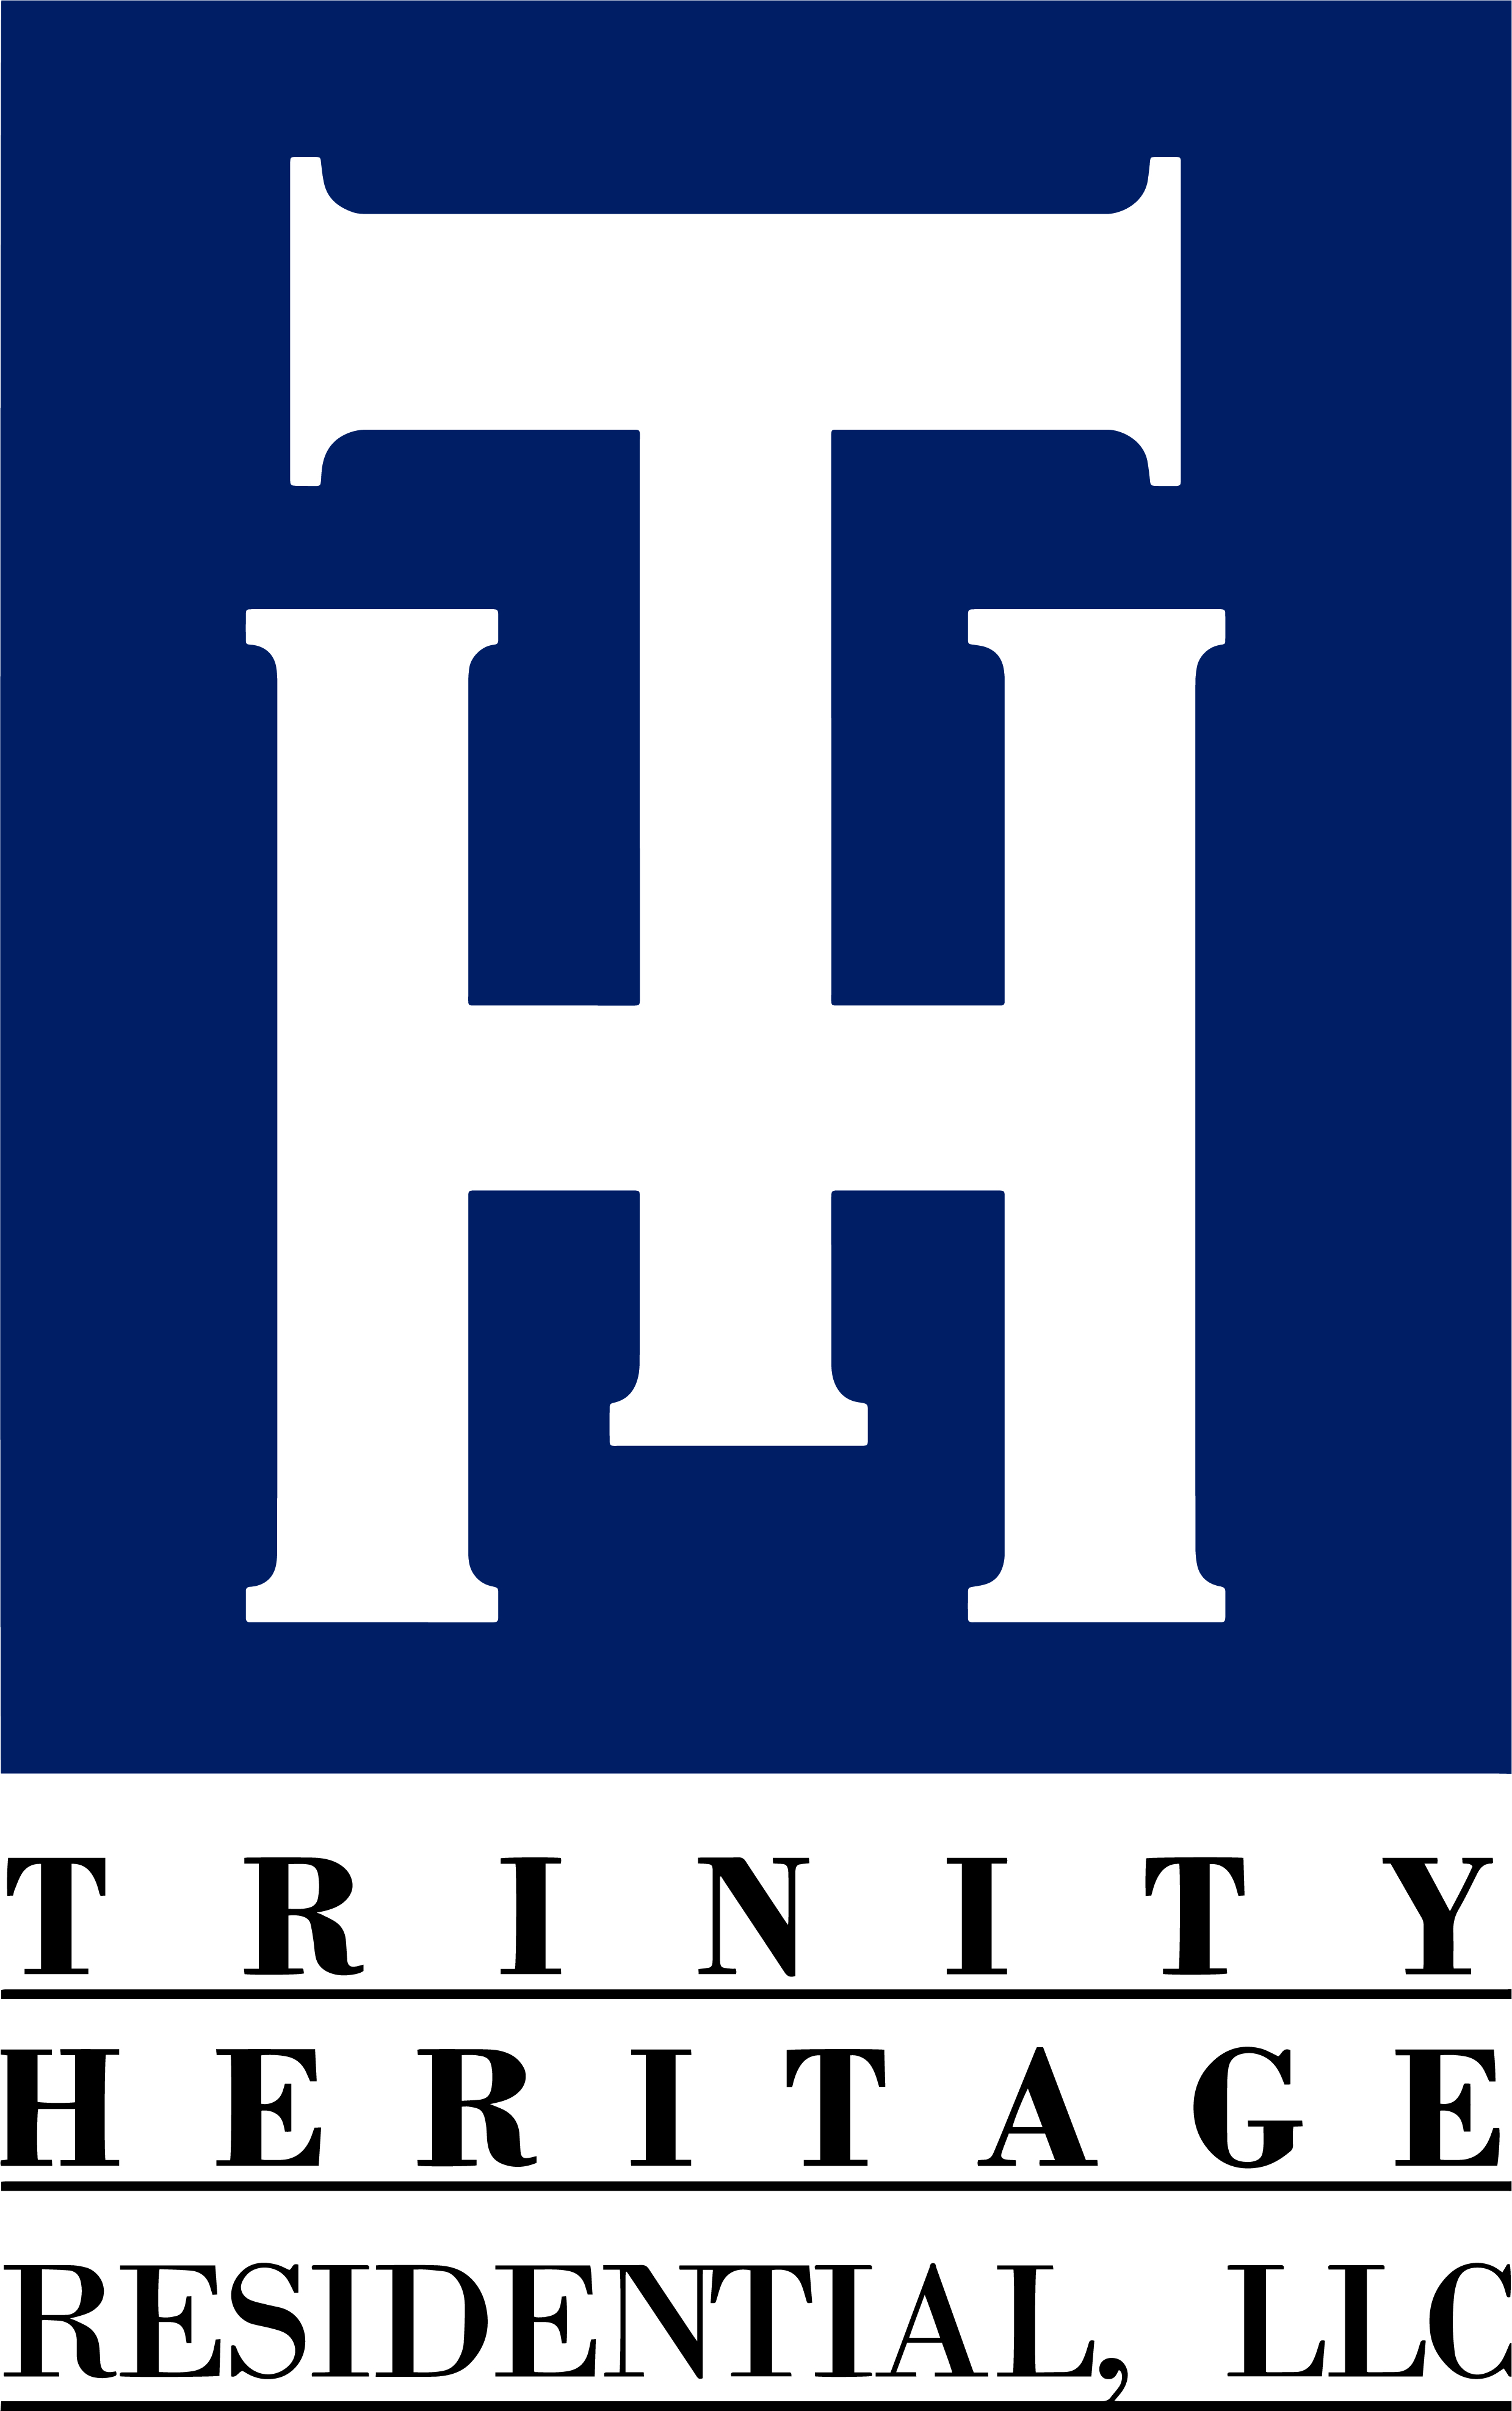 Trinity Heritage Residential, LLC